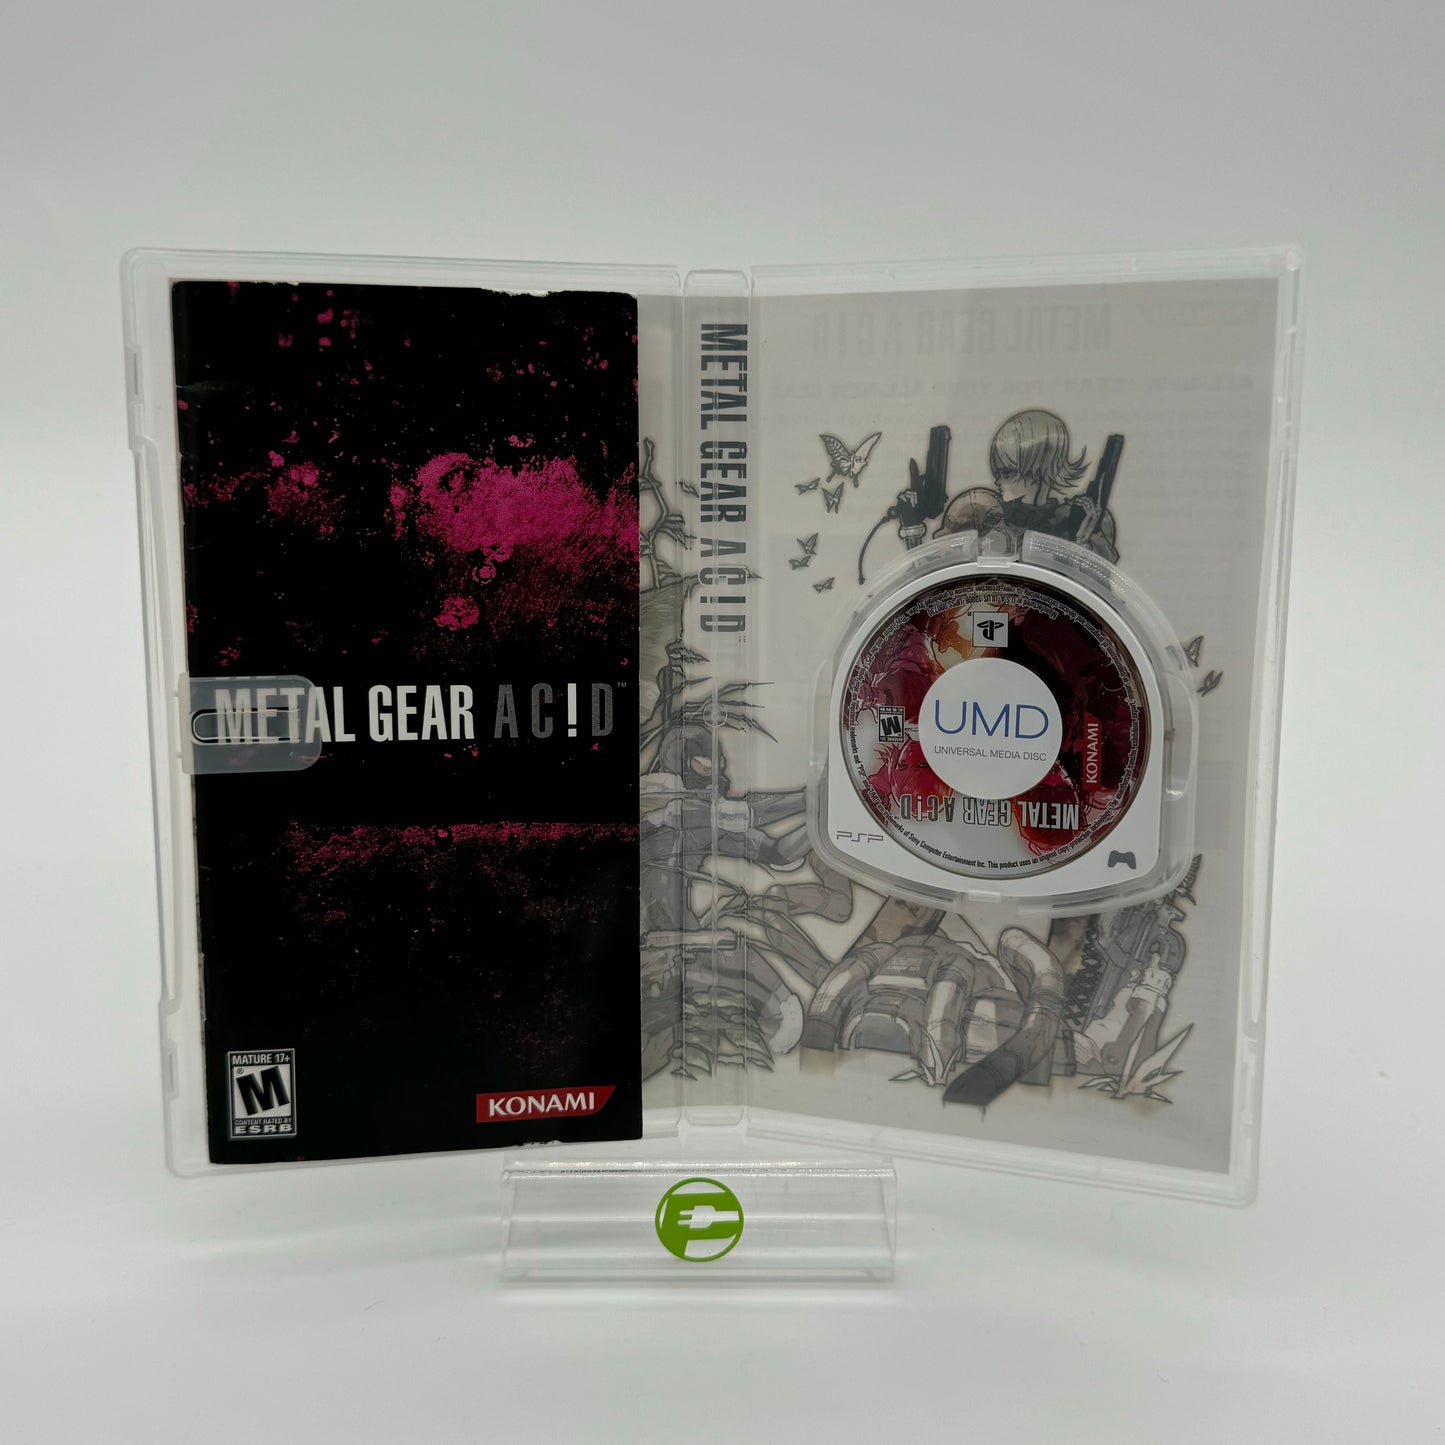 Metal Gear Acid  (Sony PlayStation Portable PSP,  2005)